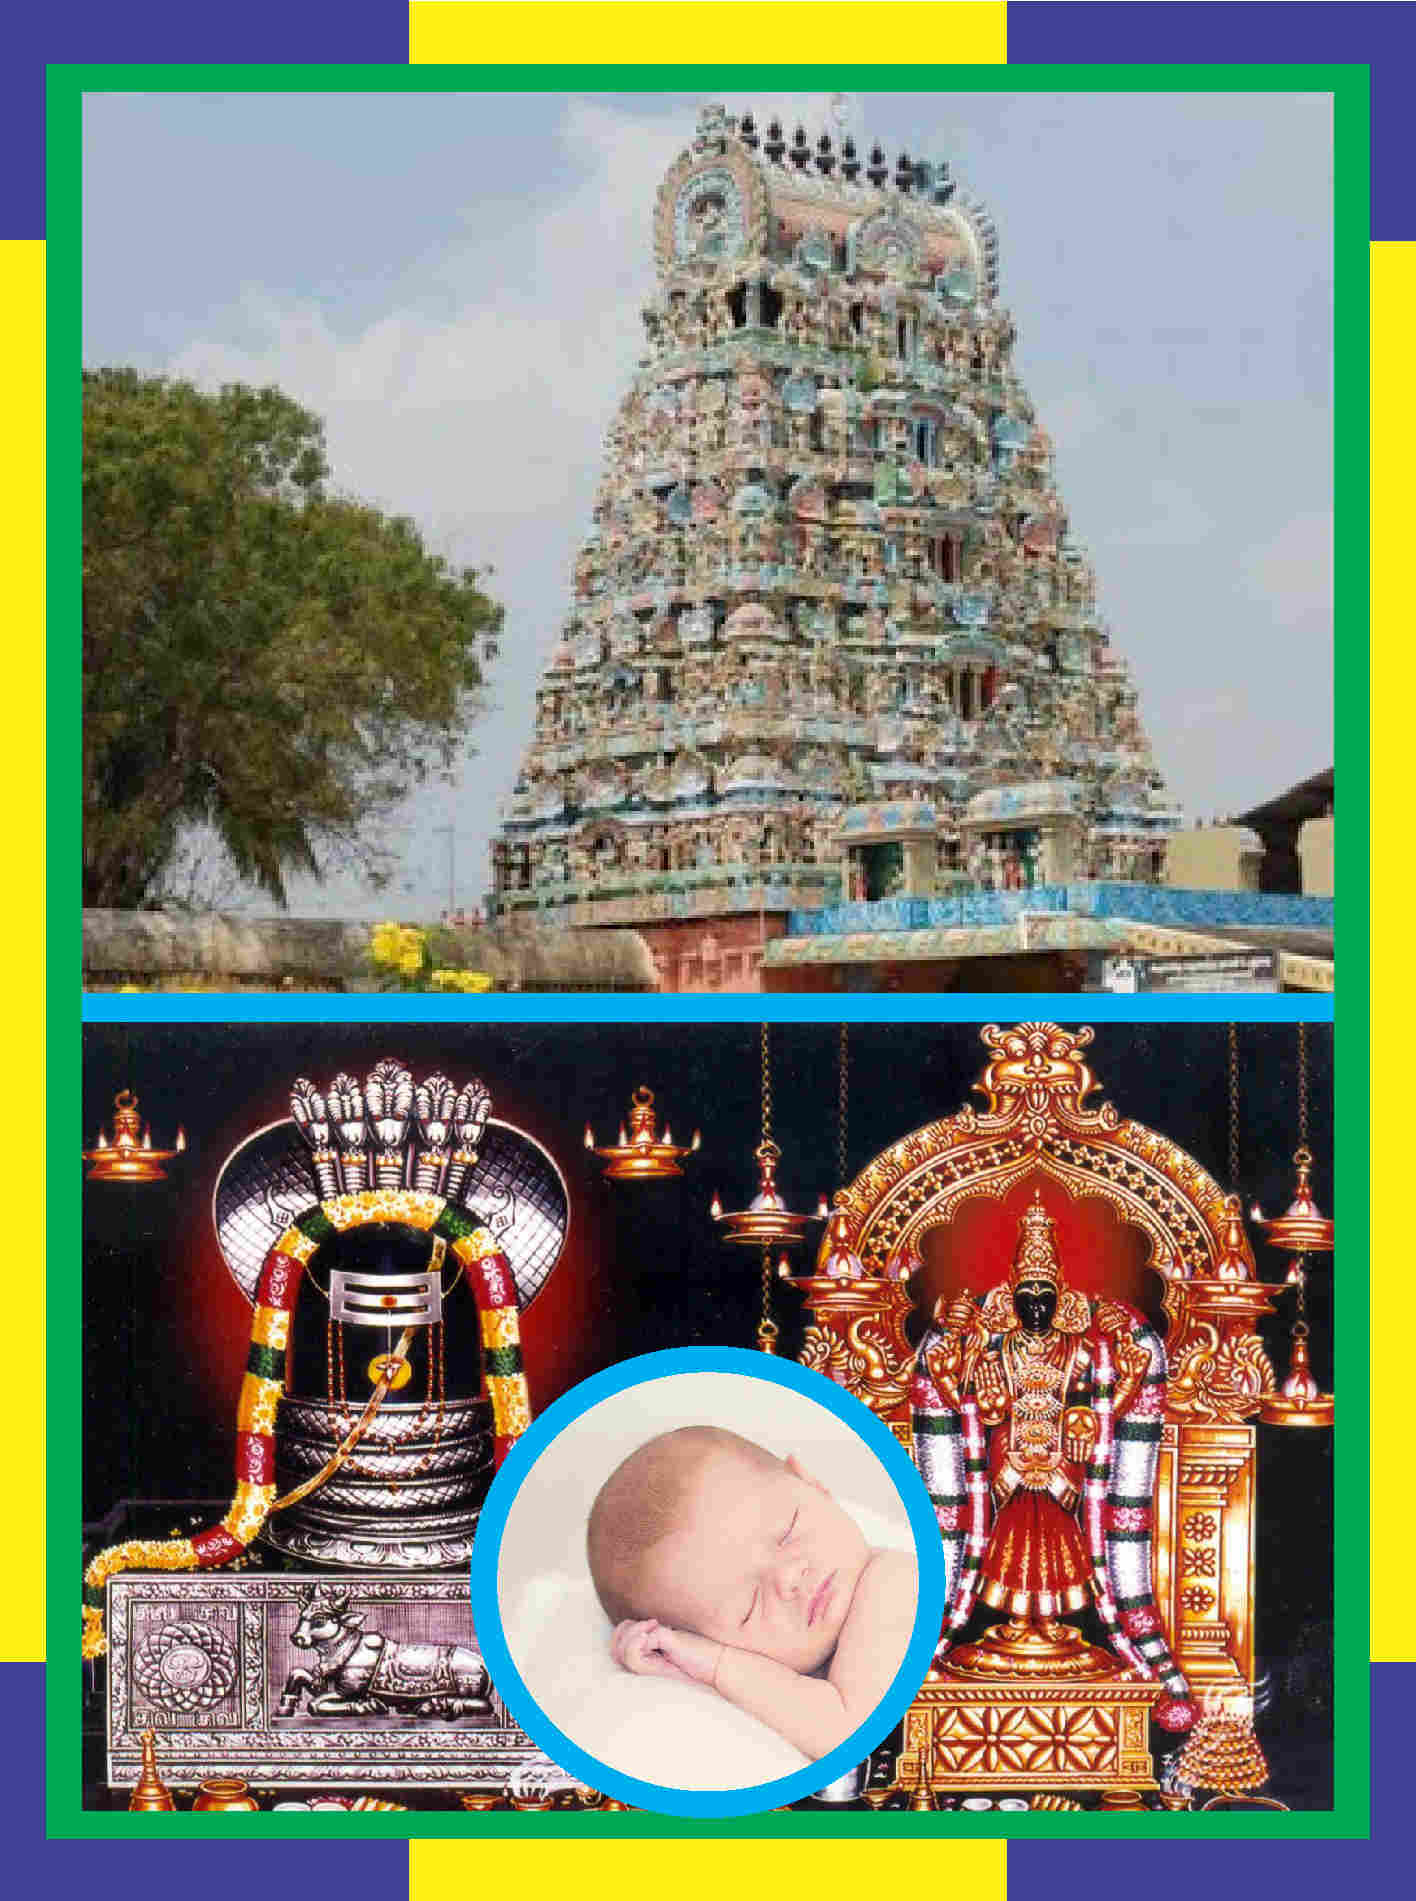 Thirukarukavur Garbarakshambigai Spl Archana for Safe Delivery